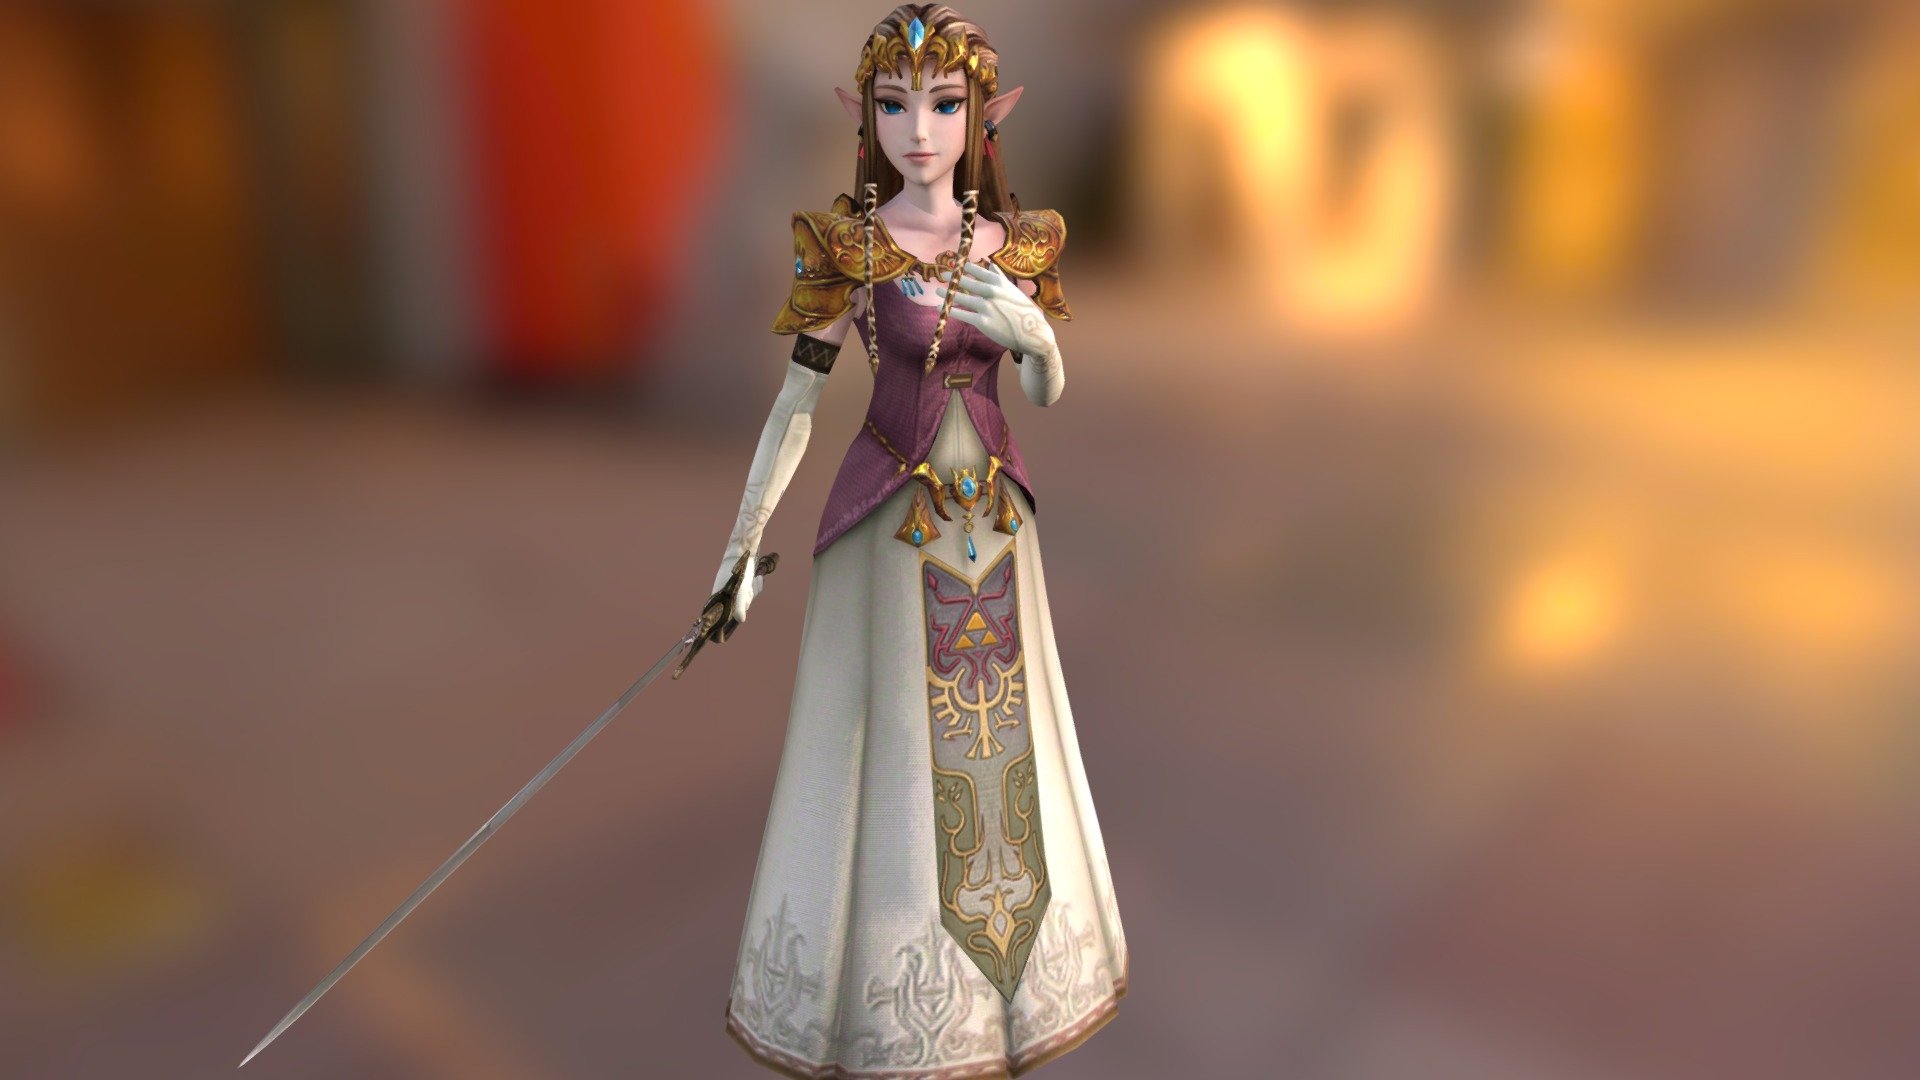 legend of zelda twilight princess free download 3ds